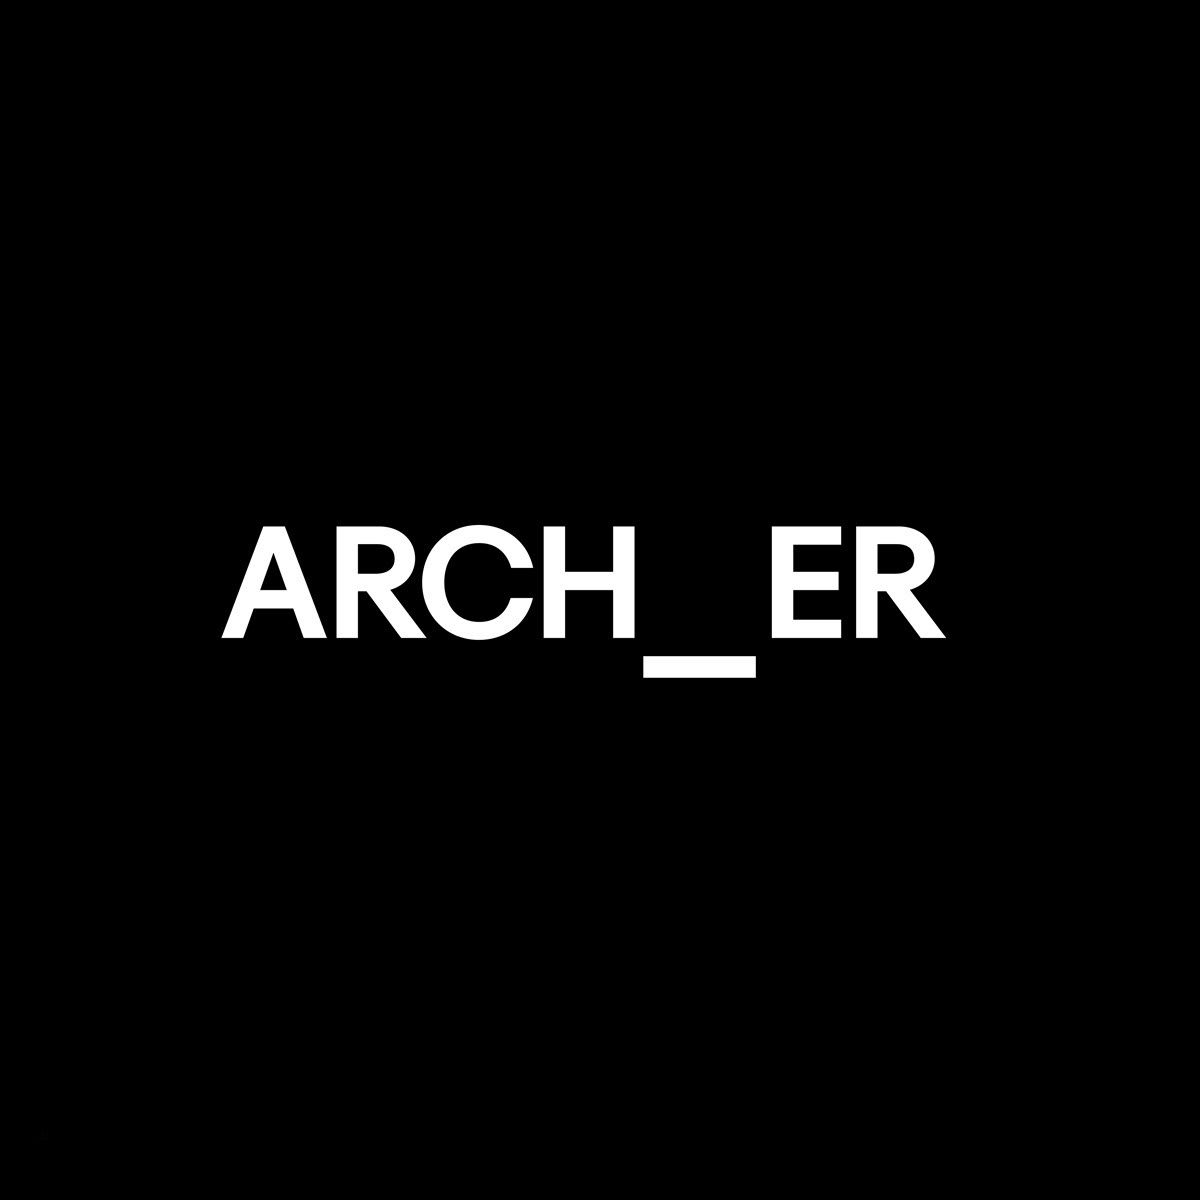 Archier, visual identity on Behance